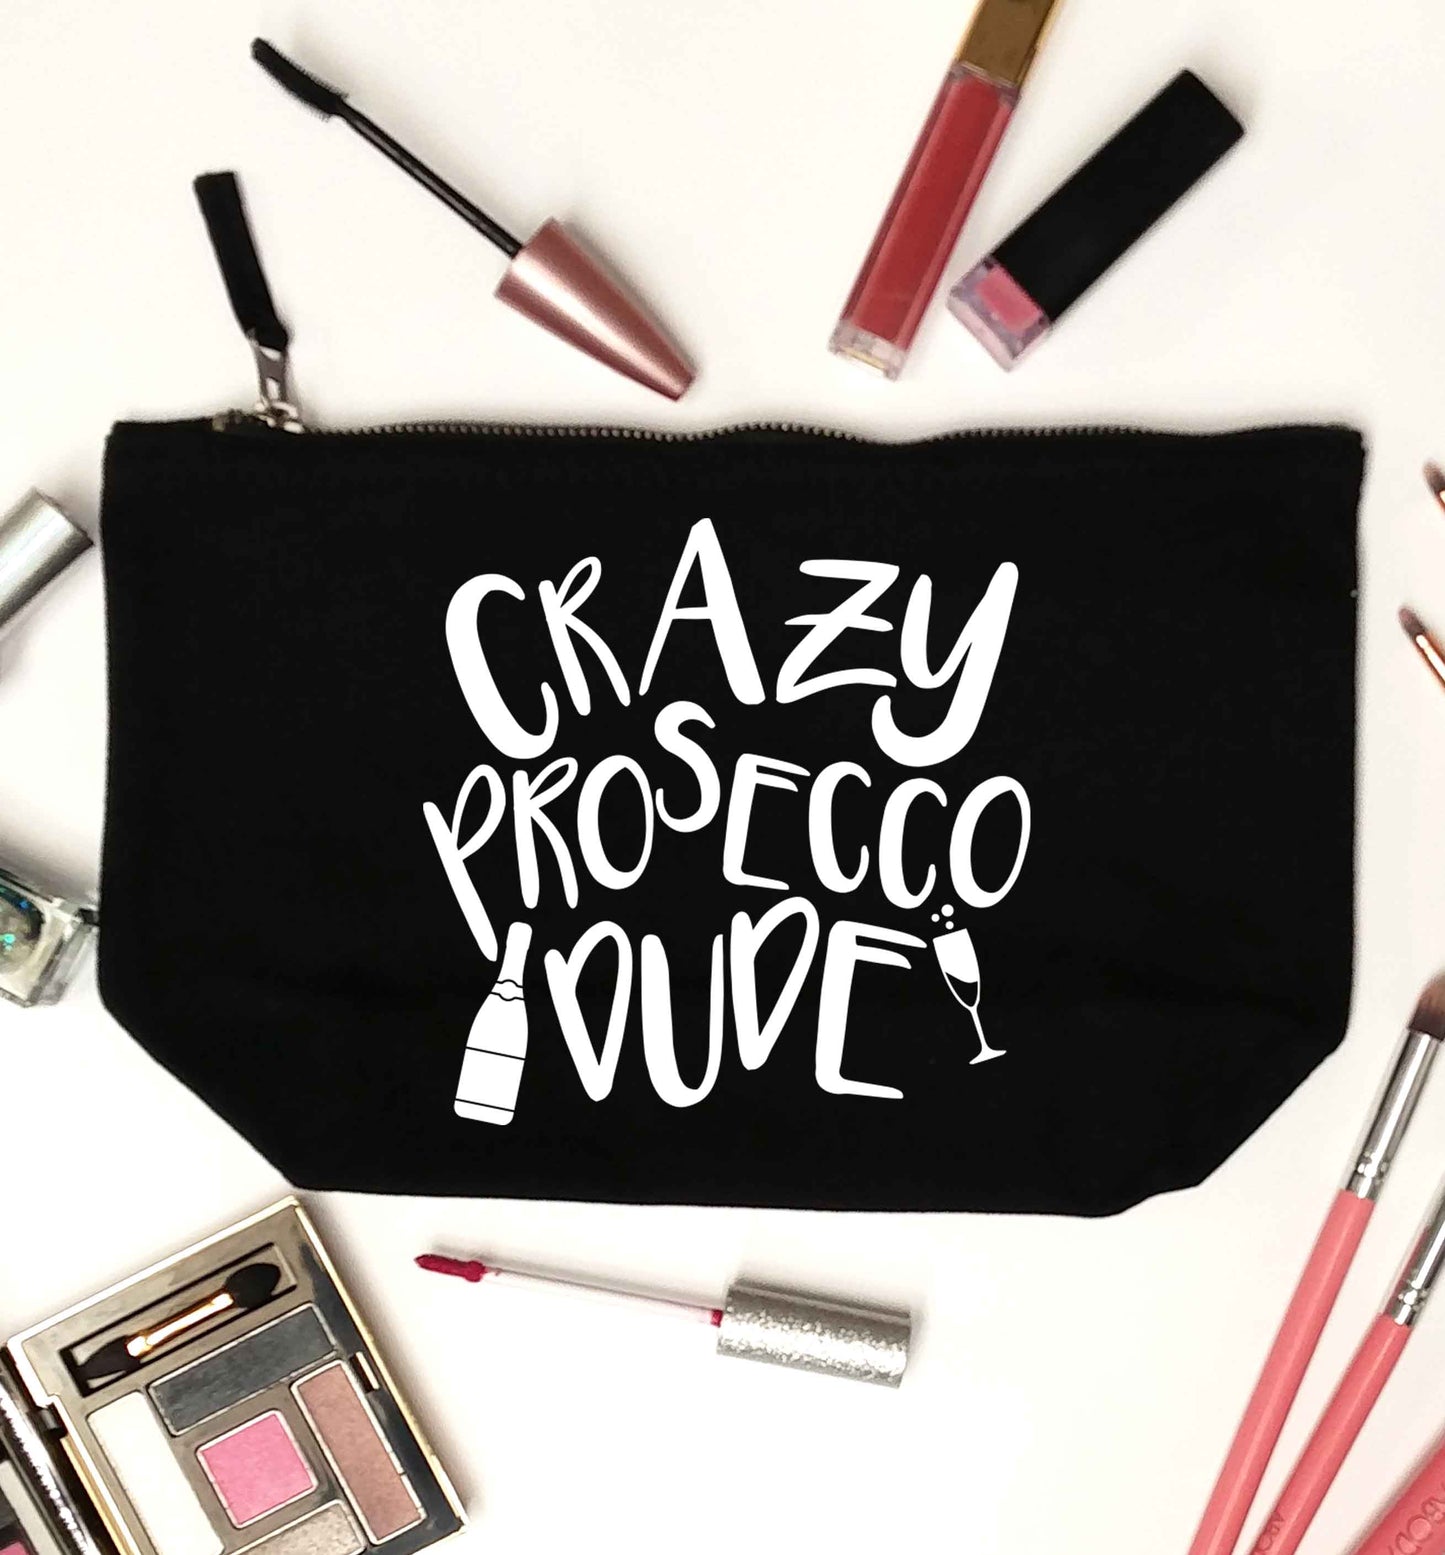 Crazy prosecco dude black makeup bag